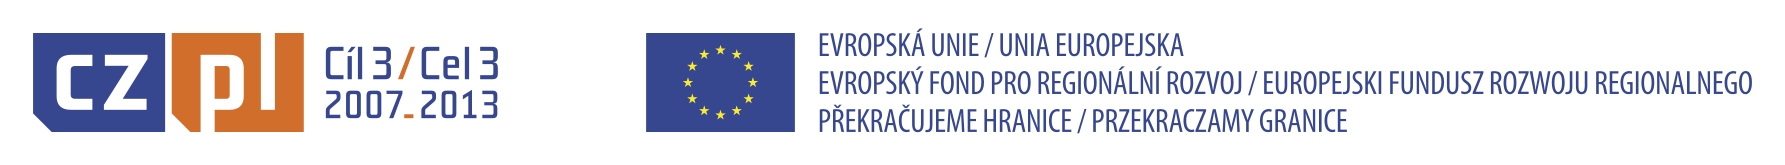 Logo cz-pl 2007 - 2013